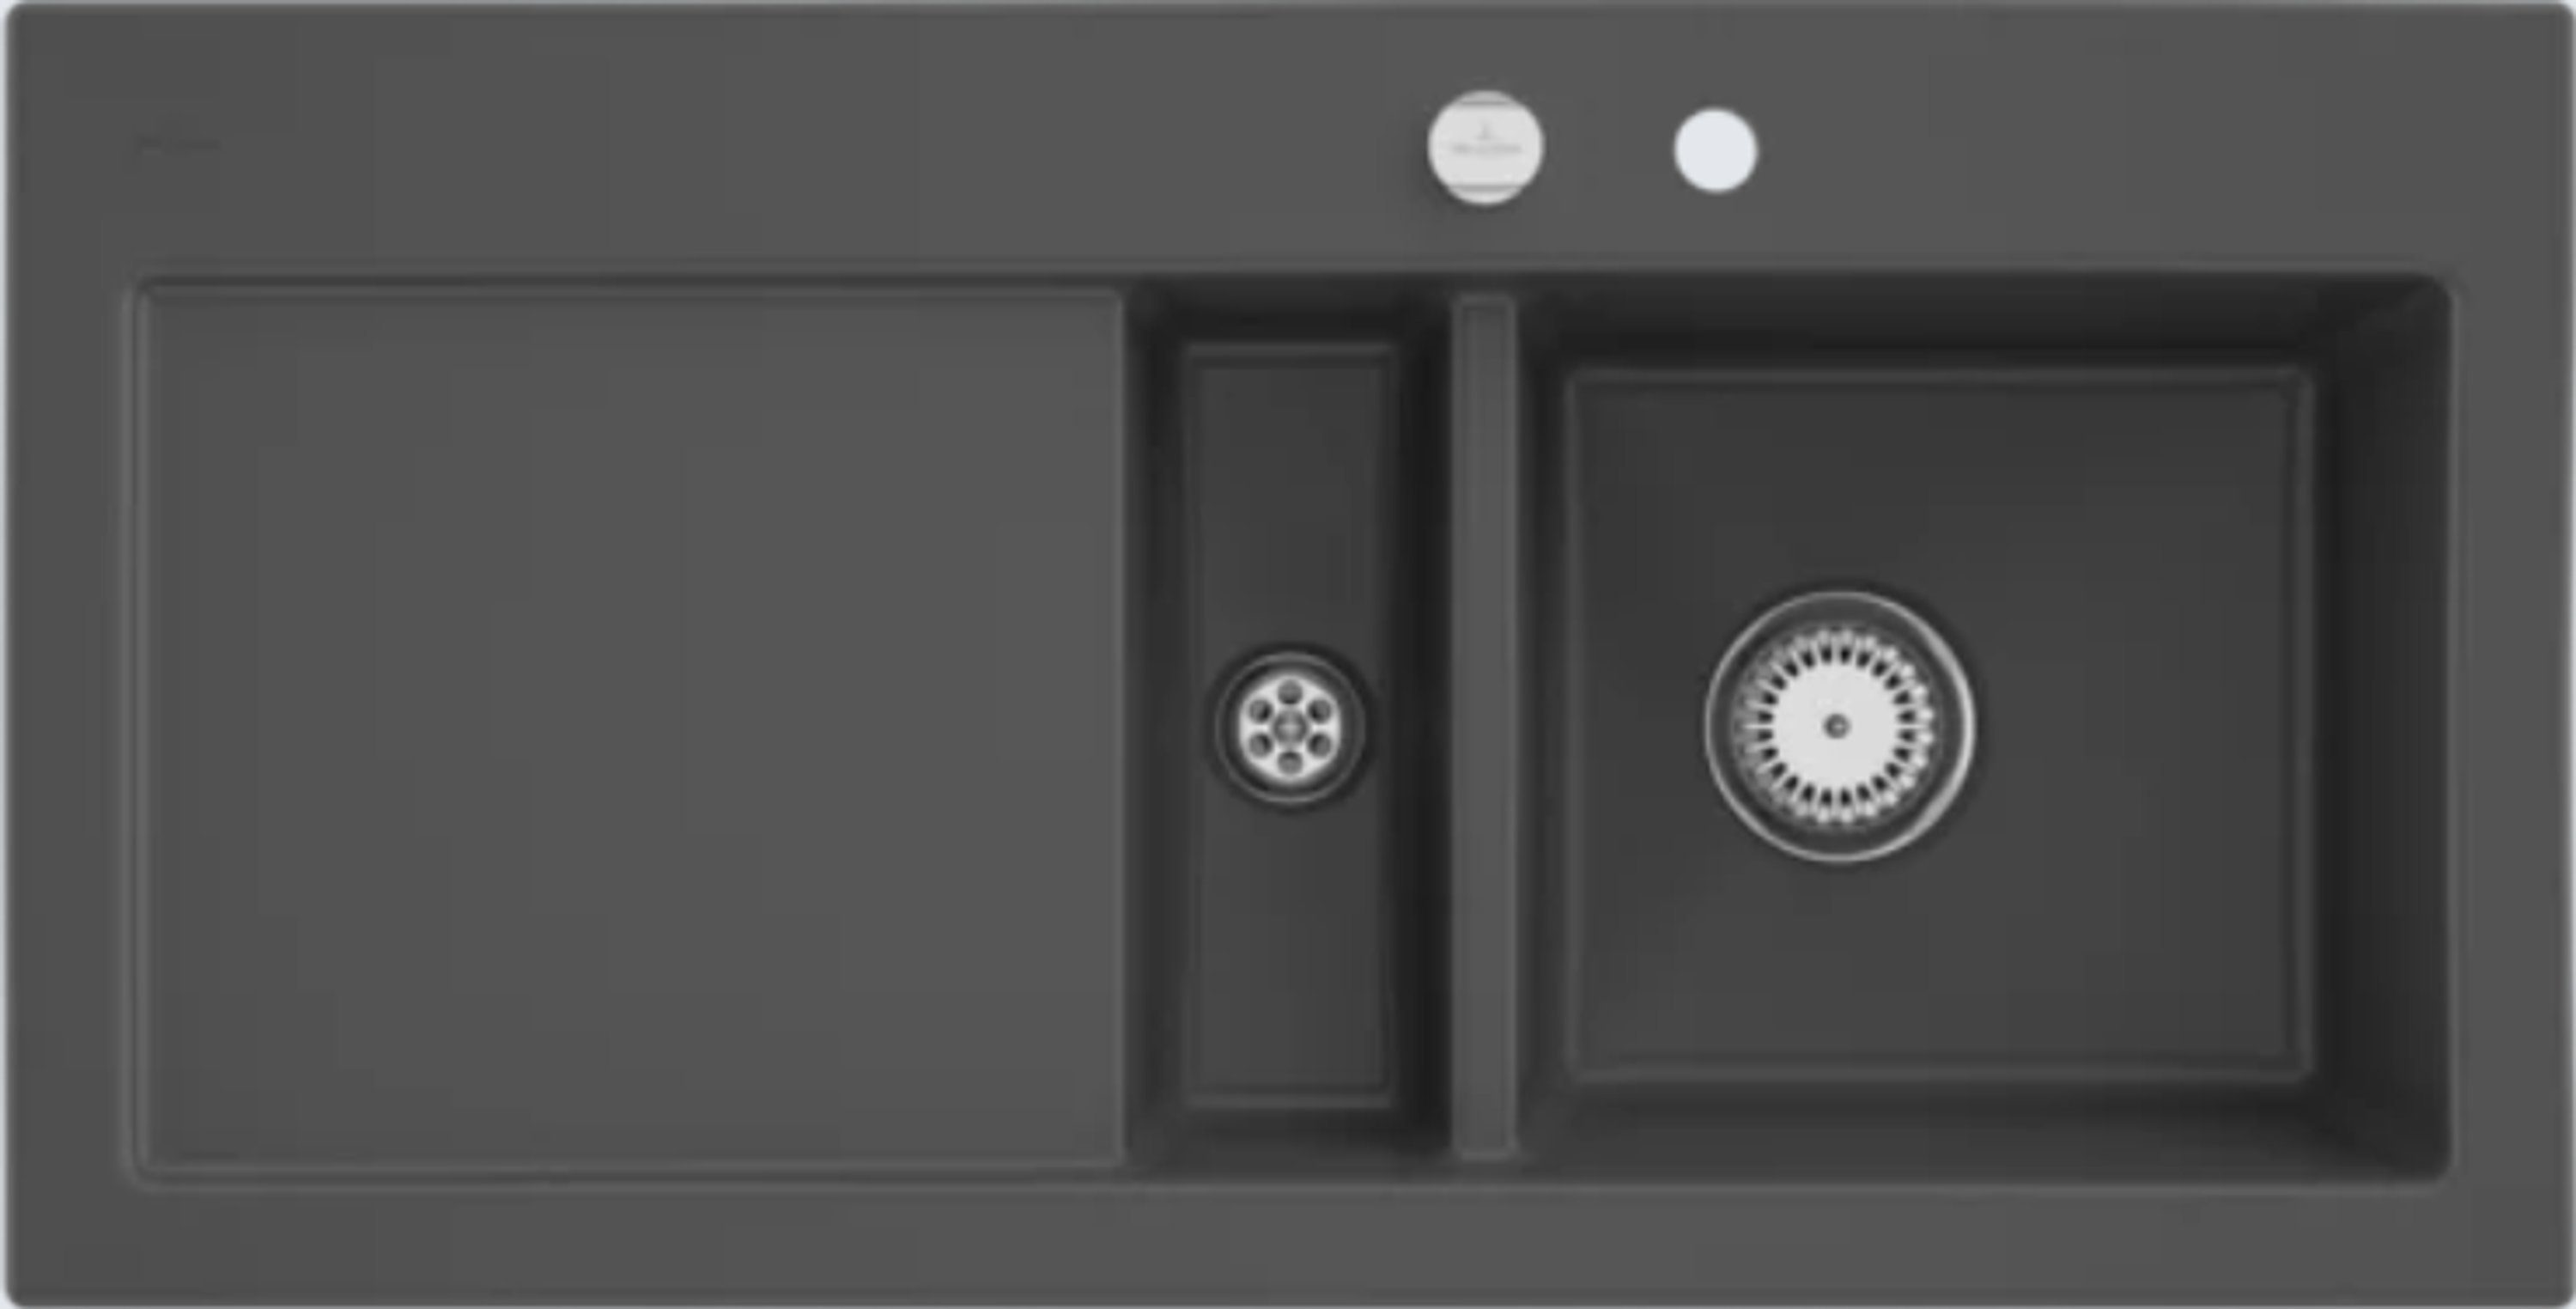 Boch & cm, 02 geschützt, Küchenspüle 6712 Villeroy Becken 100/22 links möglich i4, und Geschmacksmuster Rechteckig, rechts